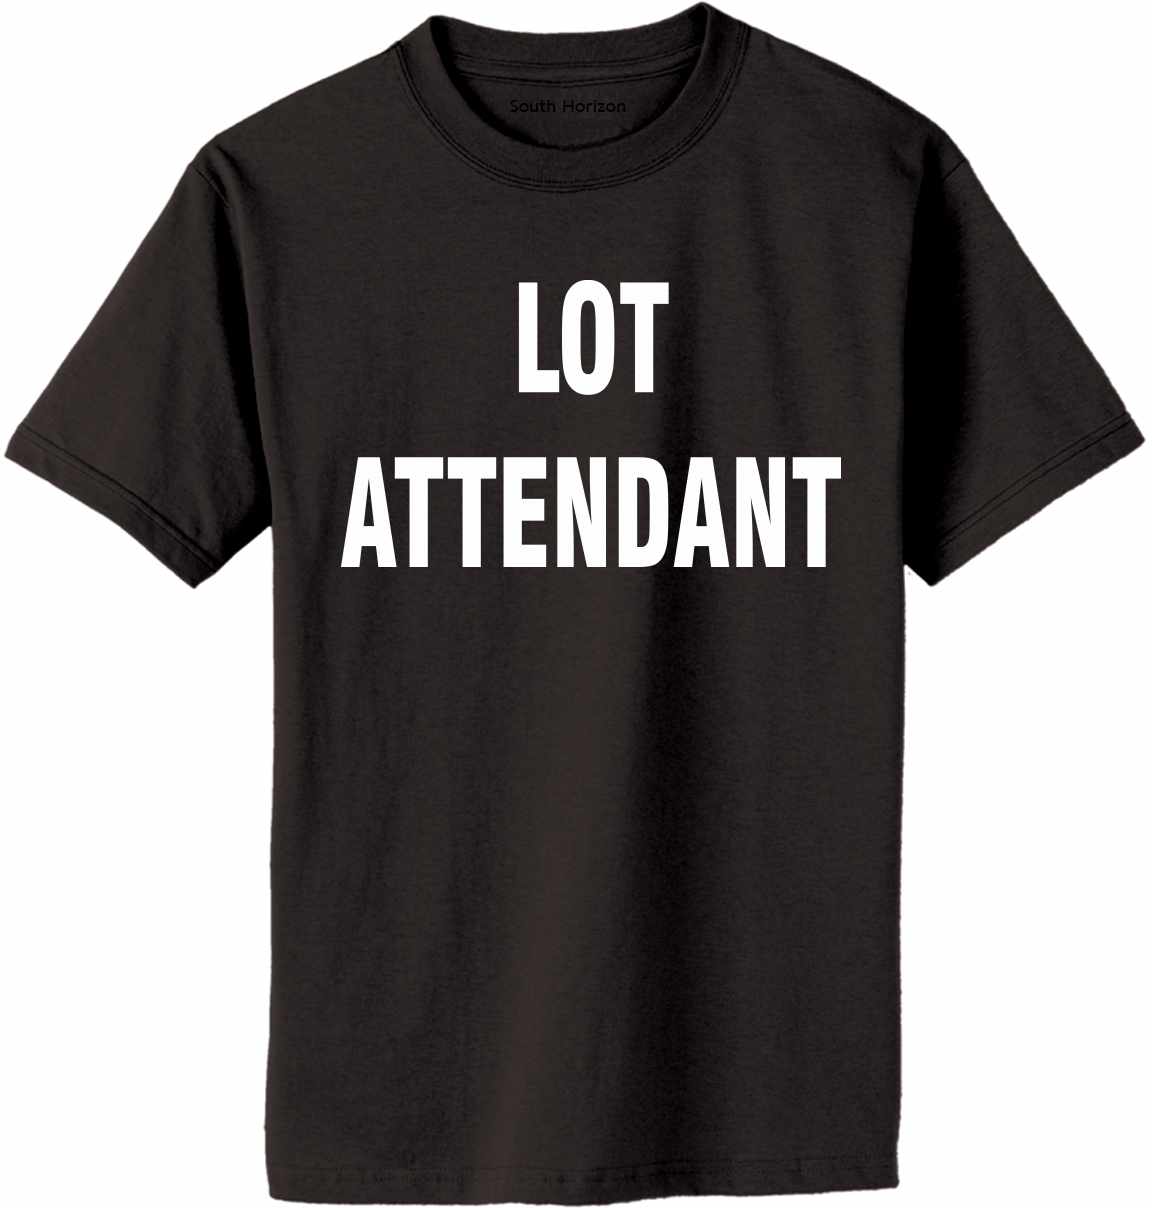 LOT ATTENDANT Adult T-Shirt